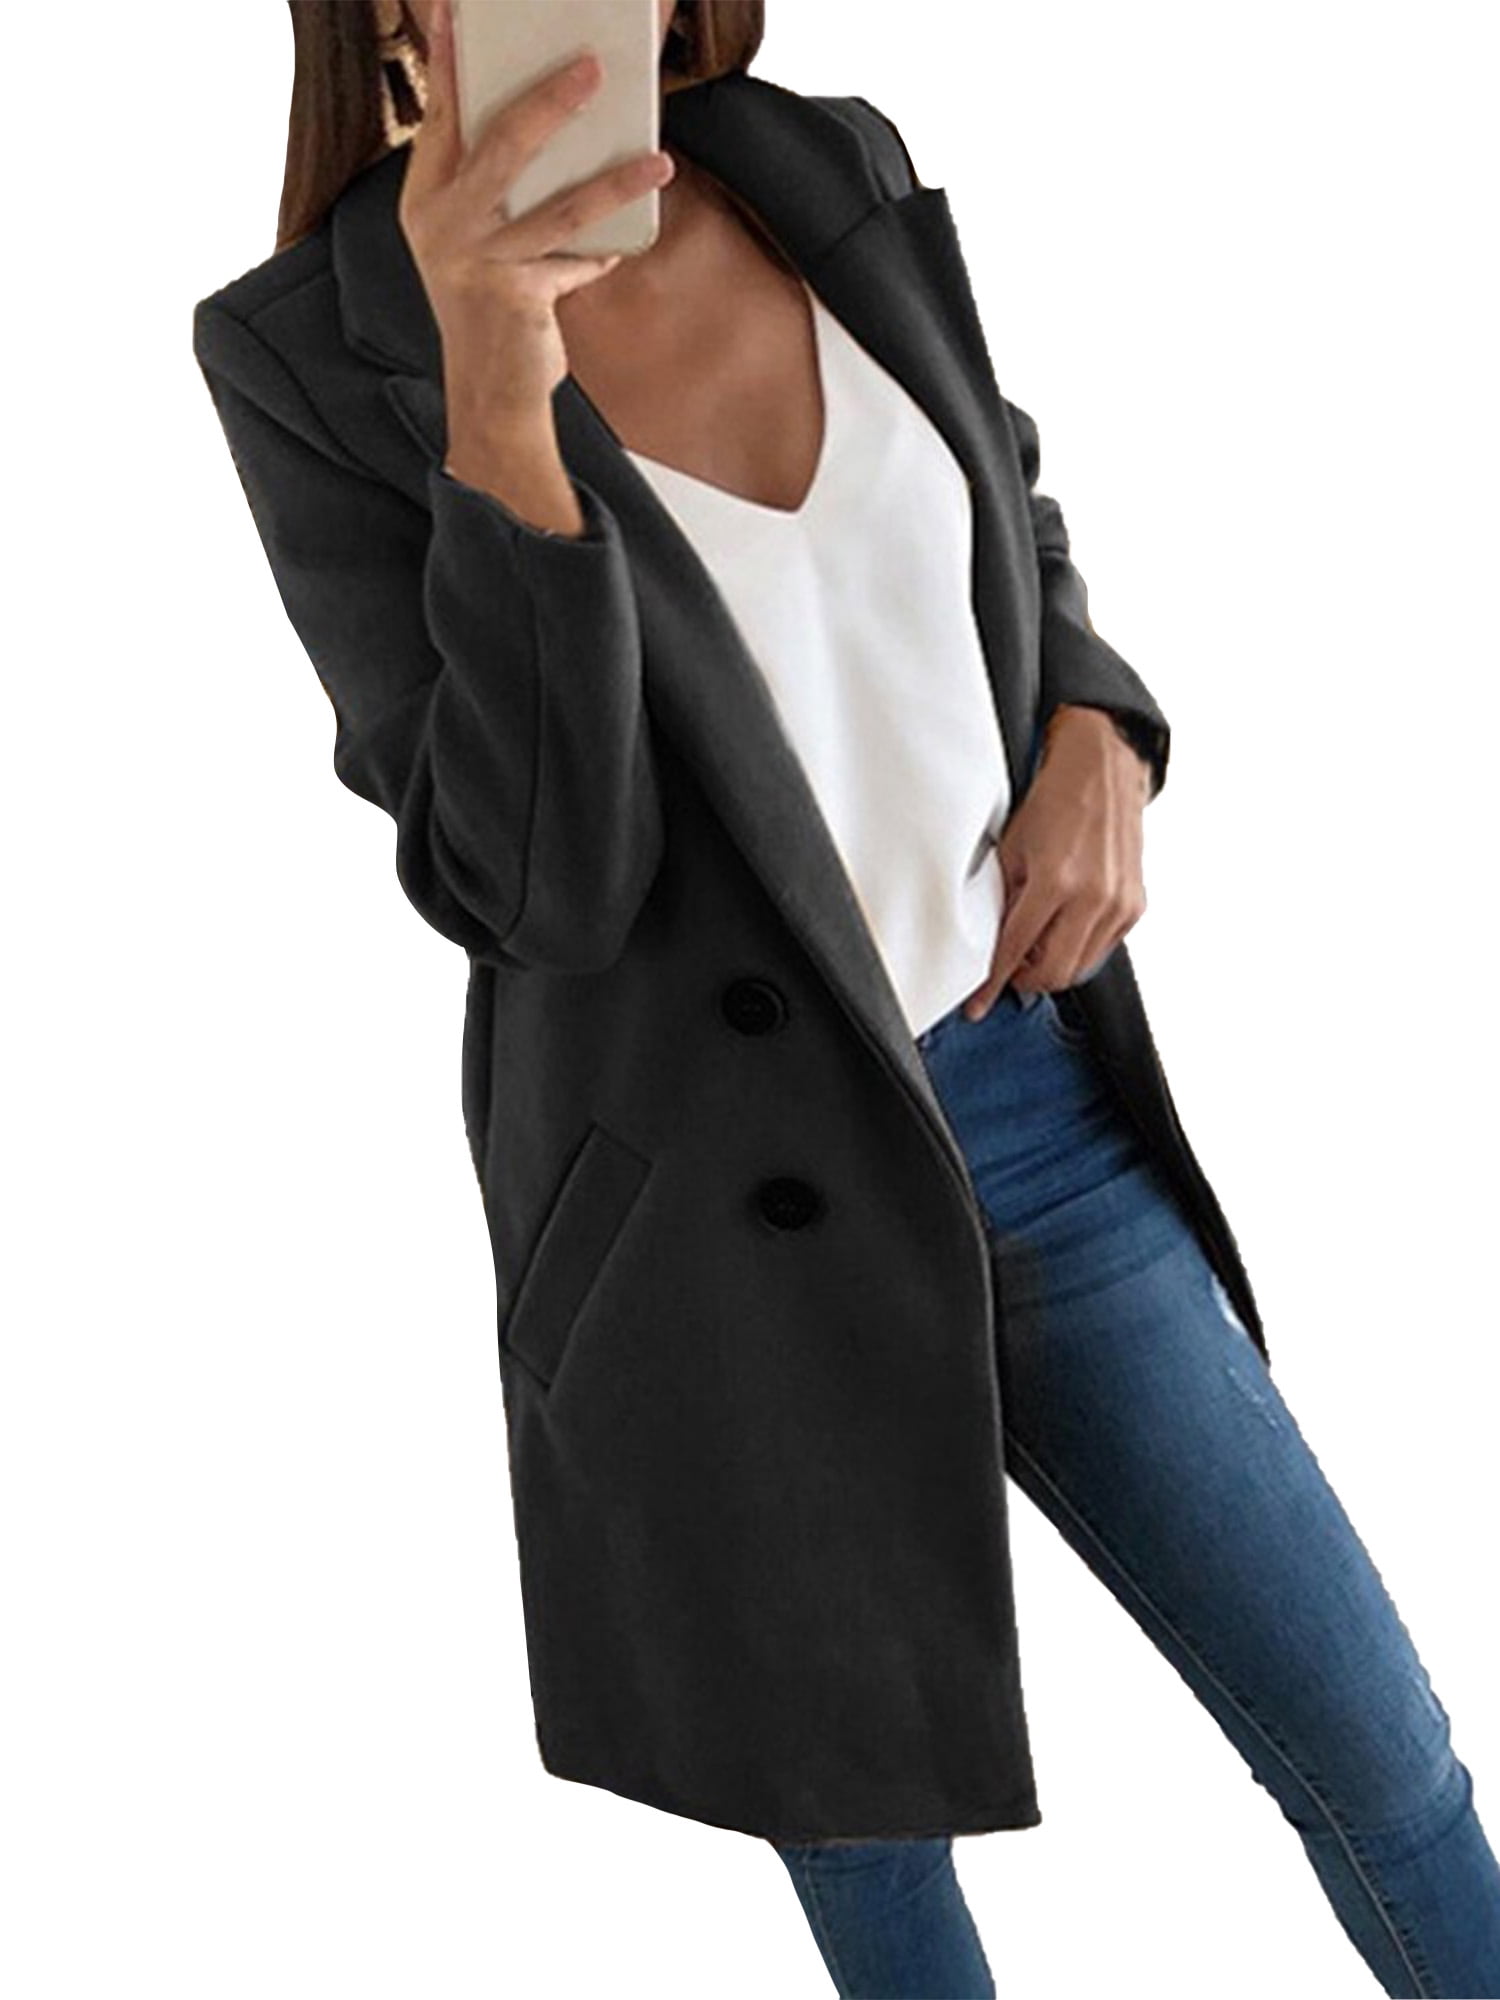 Auifor Women Winter Cardigan Coats Casual Stylish Leopard Print Long Sleeve Long Coat Daily Outwear